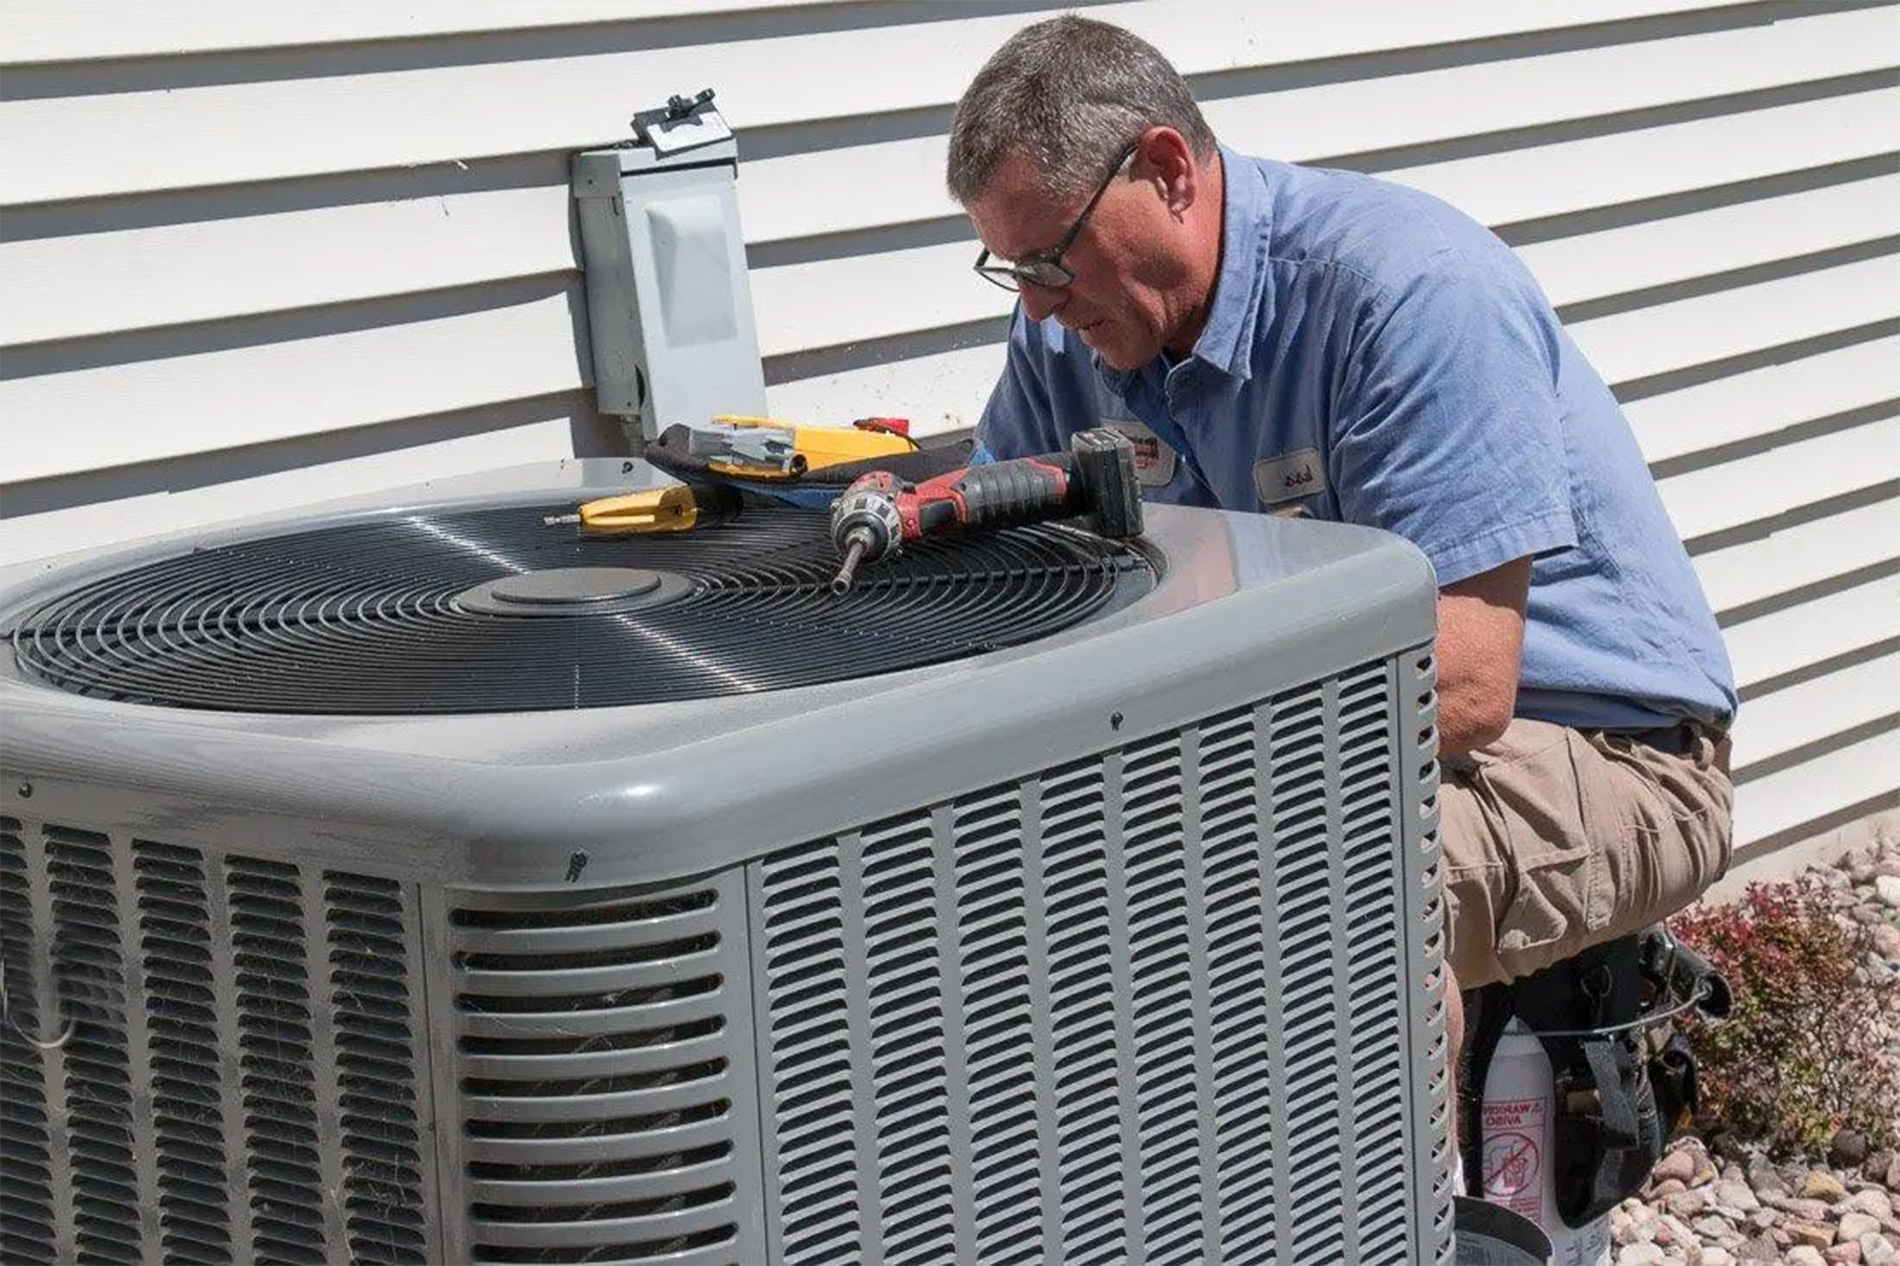 Sarasota A/C Repair - Services - Air Conditioning - Dishwasher Repair,  Appliance, Refrigerator